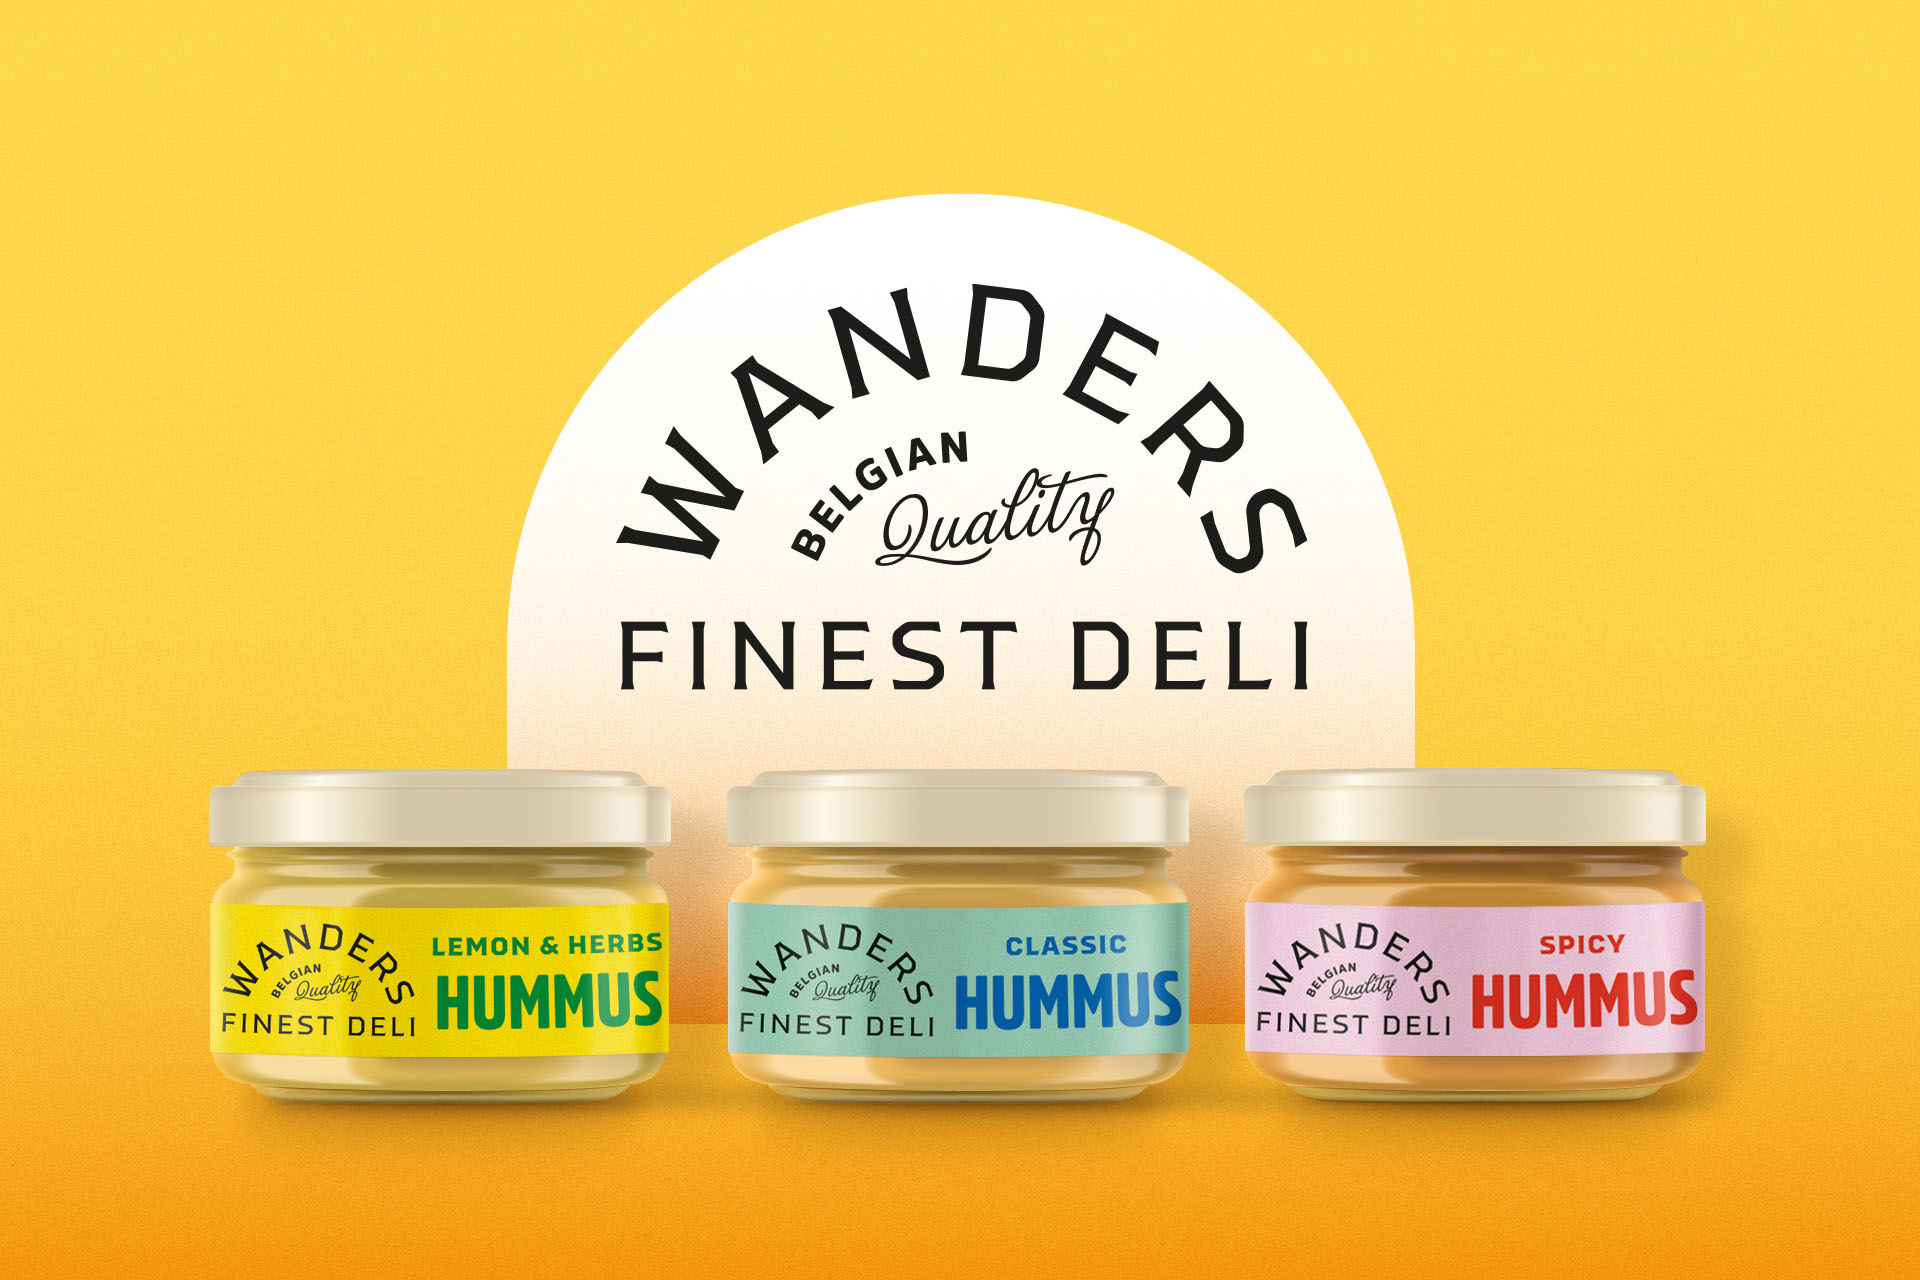 Wanders Finest Deli Branding by DesignRepublic